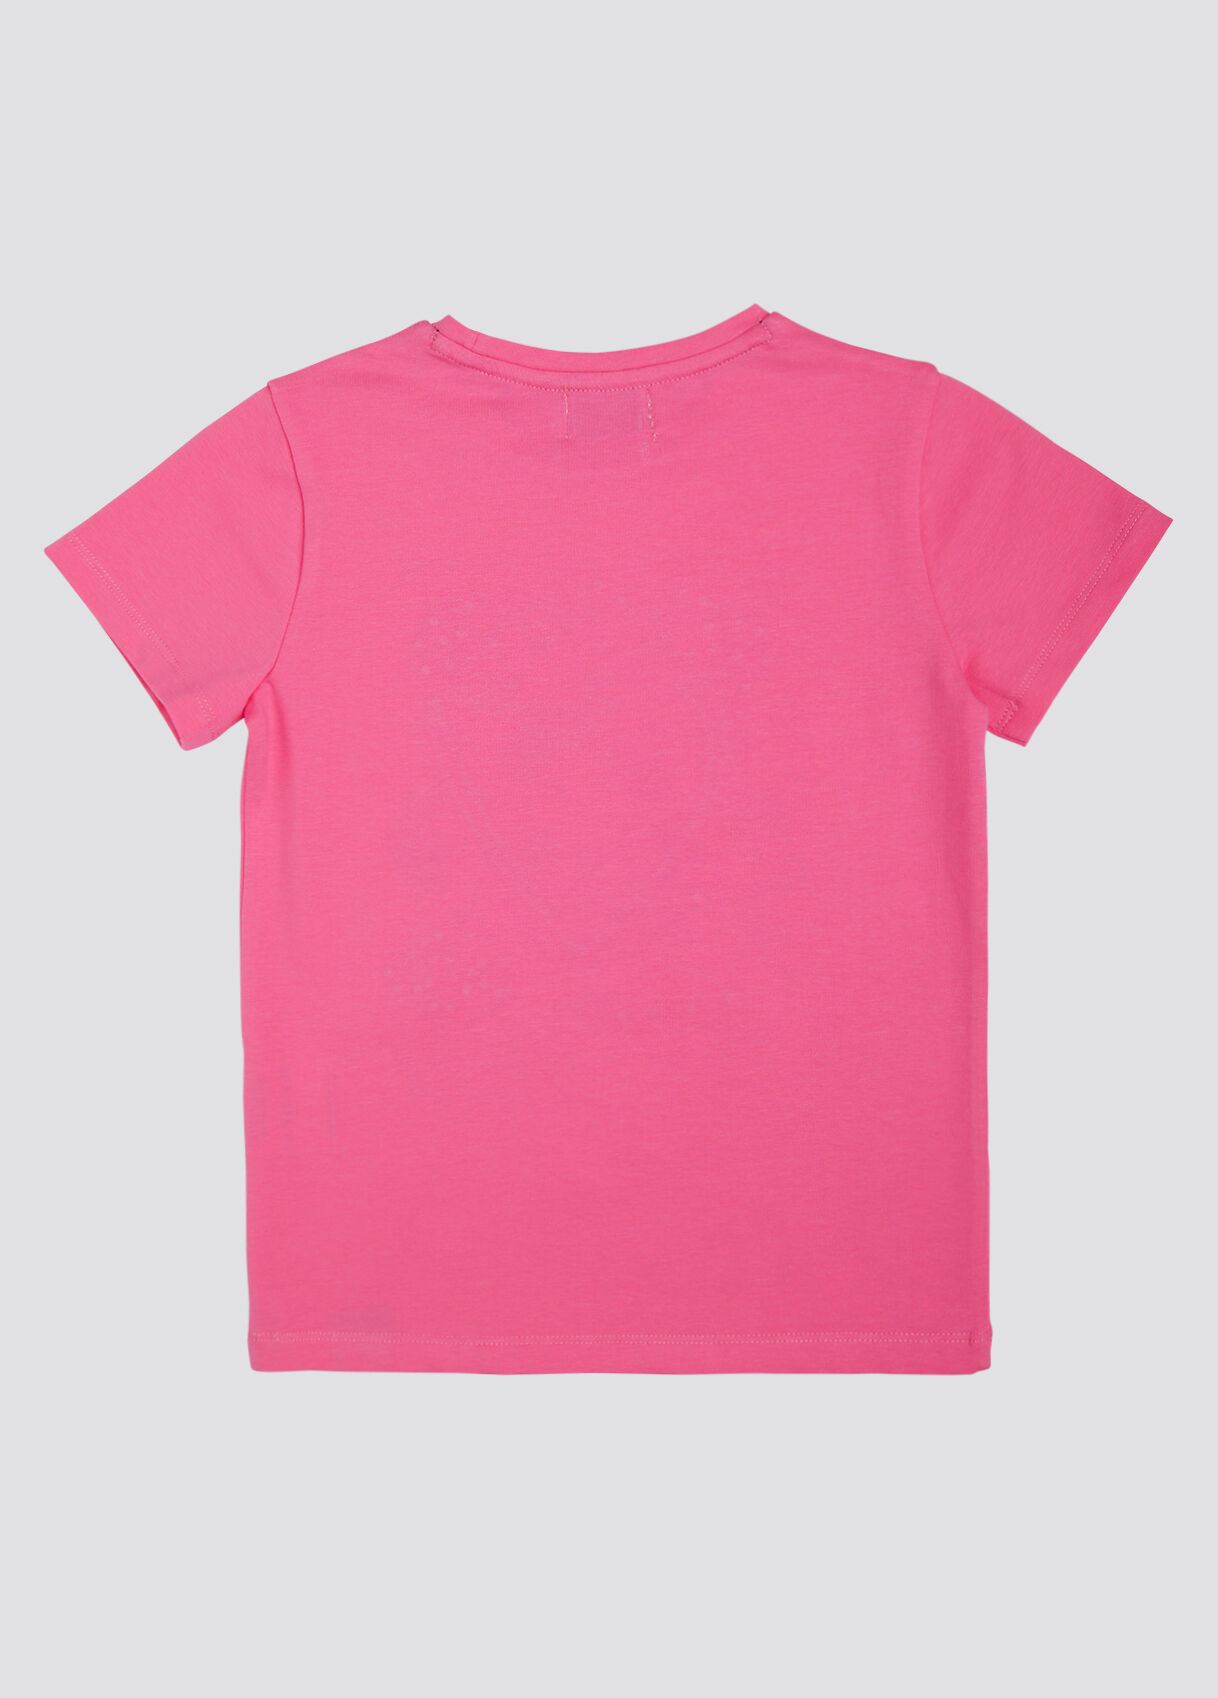 plain pink t shirt back